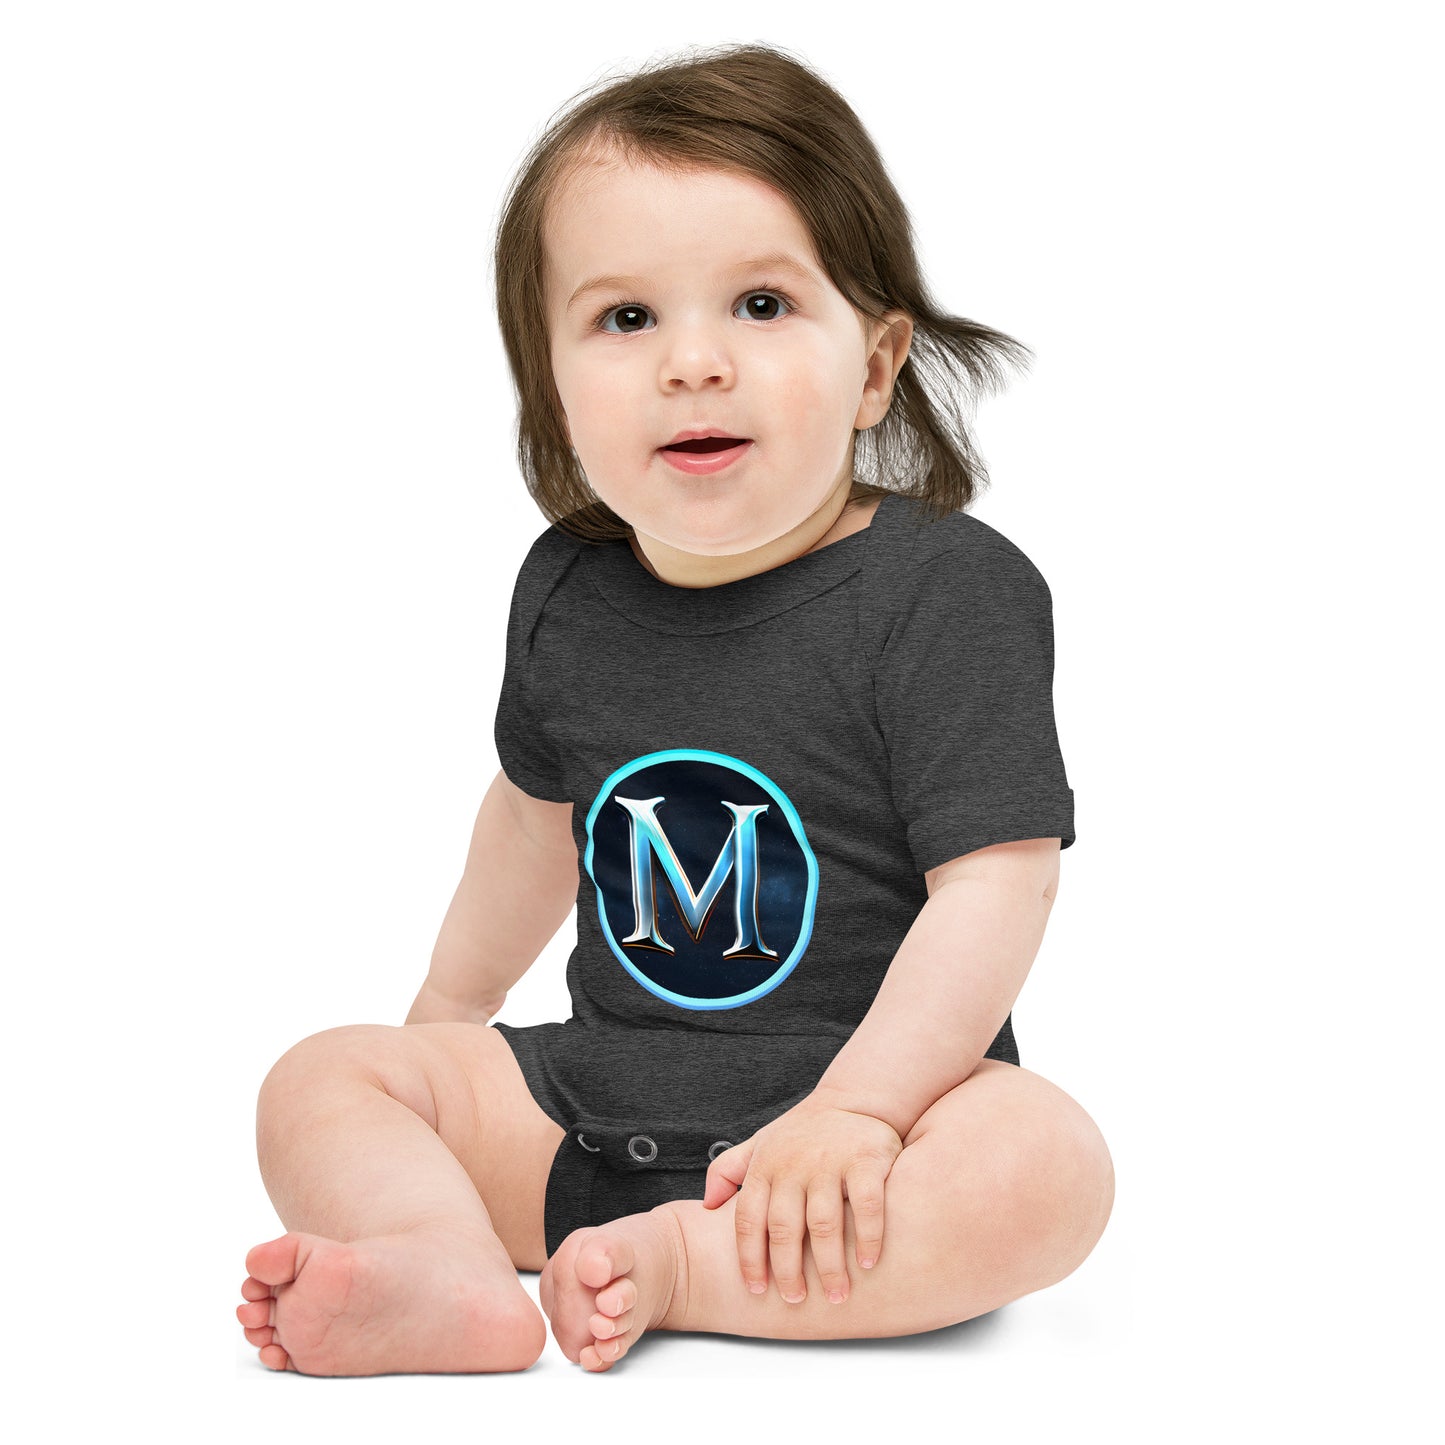 Medivia Star M Baby Bodysuit